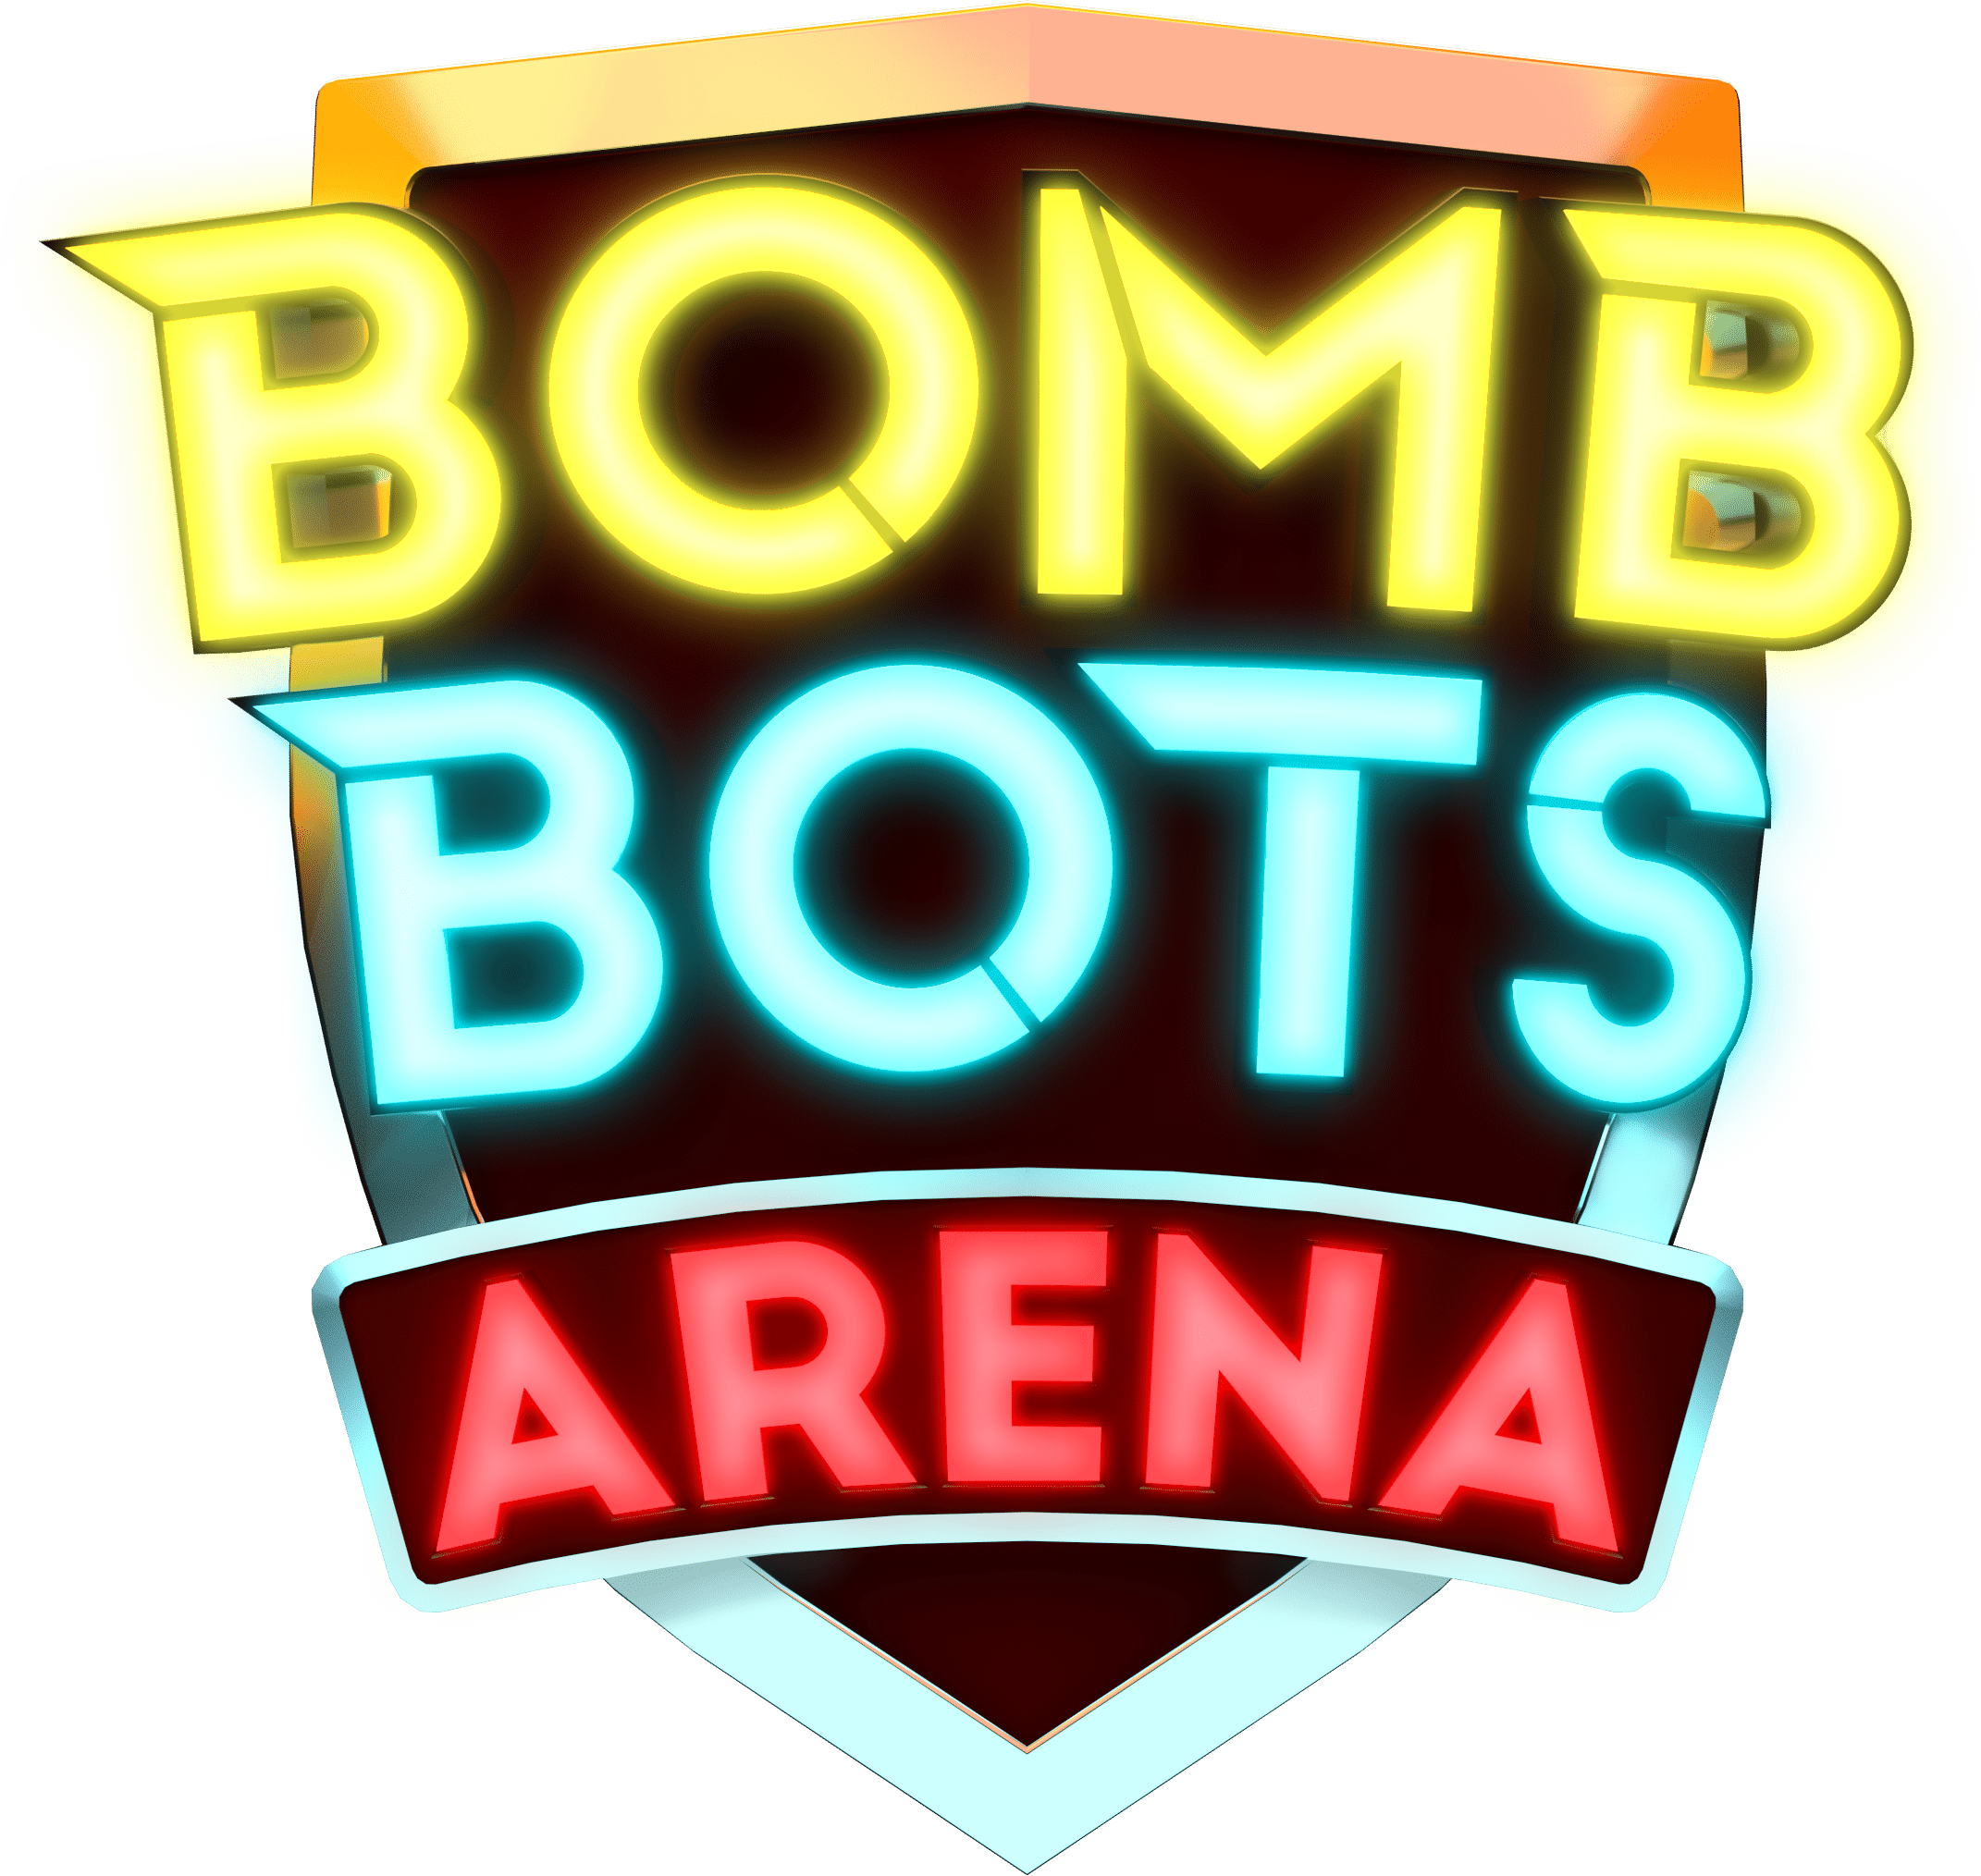 Arena Bot